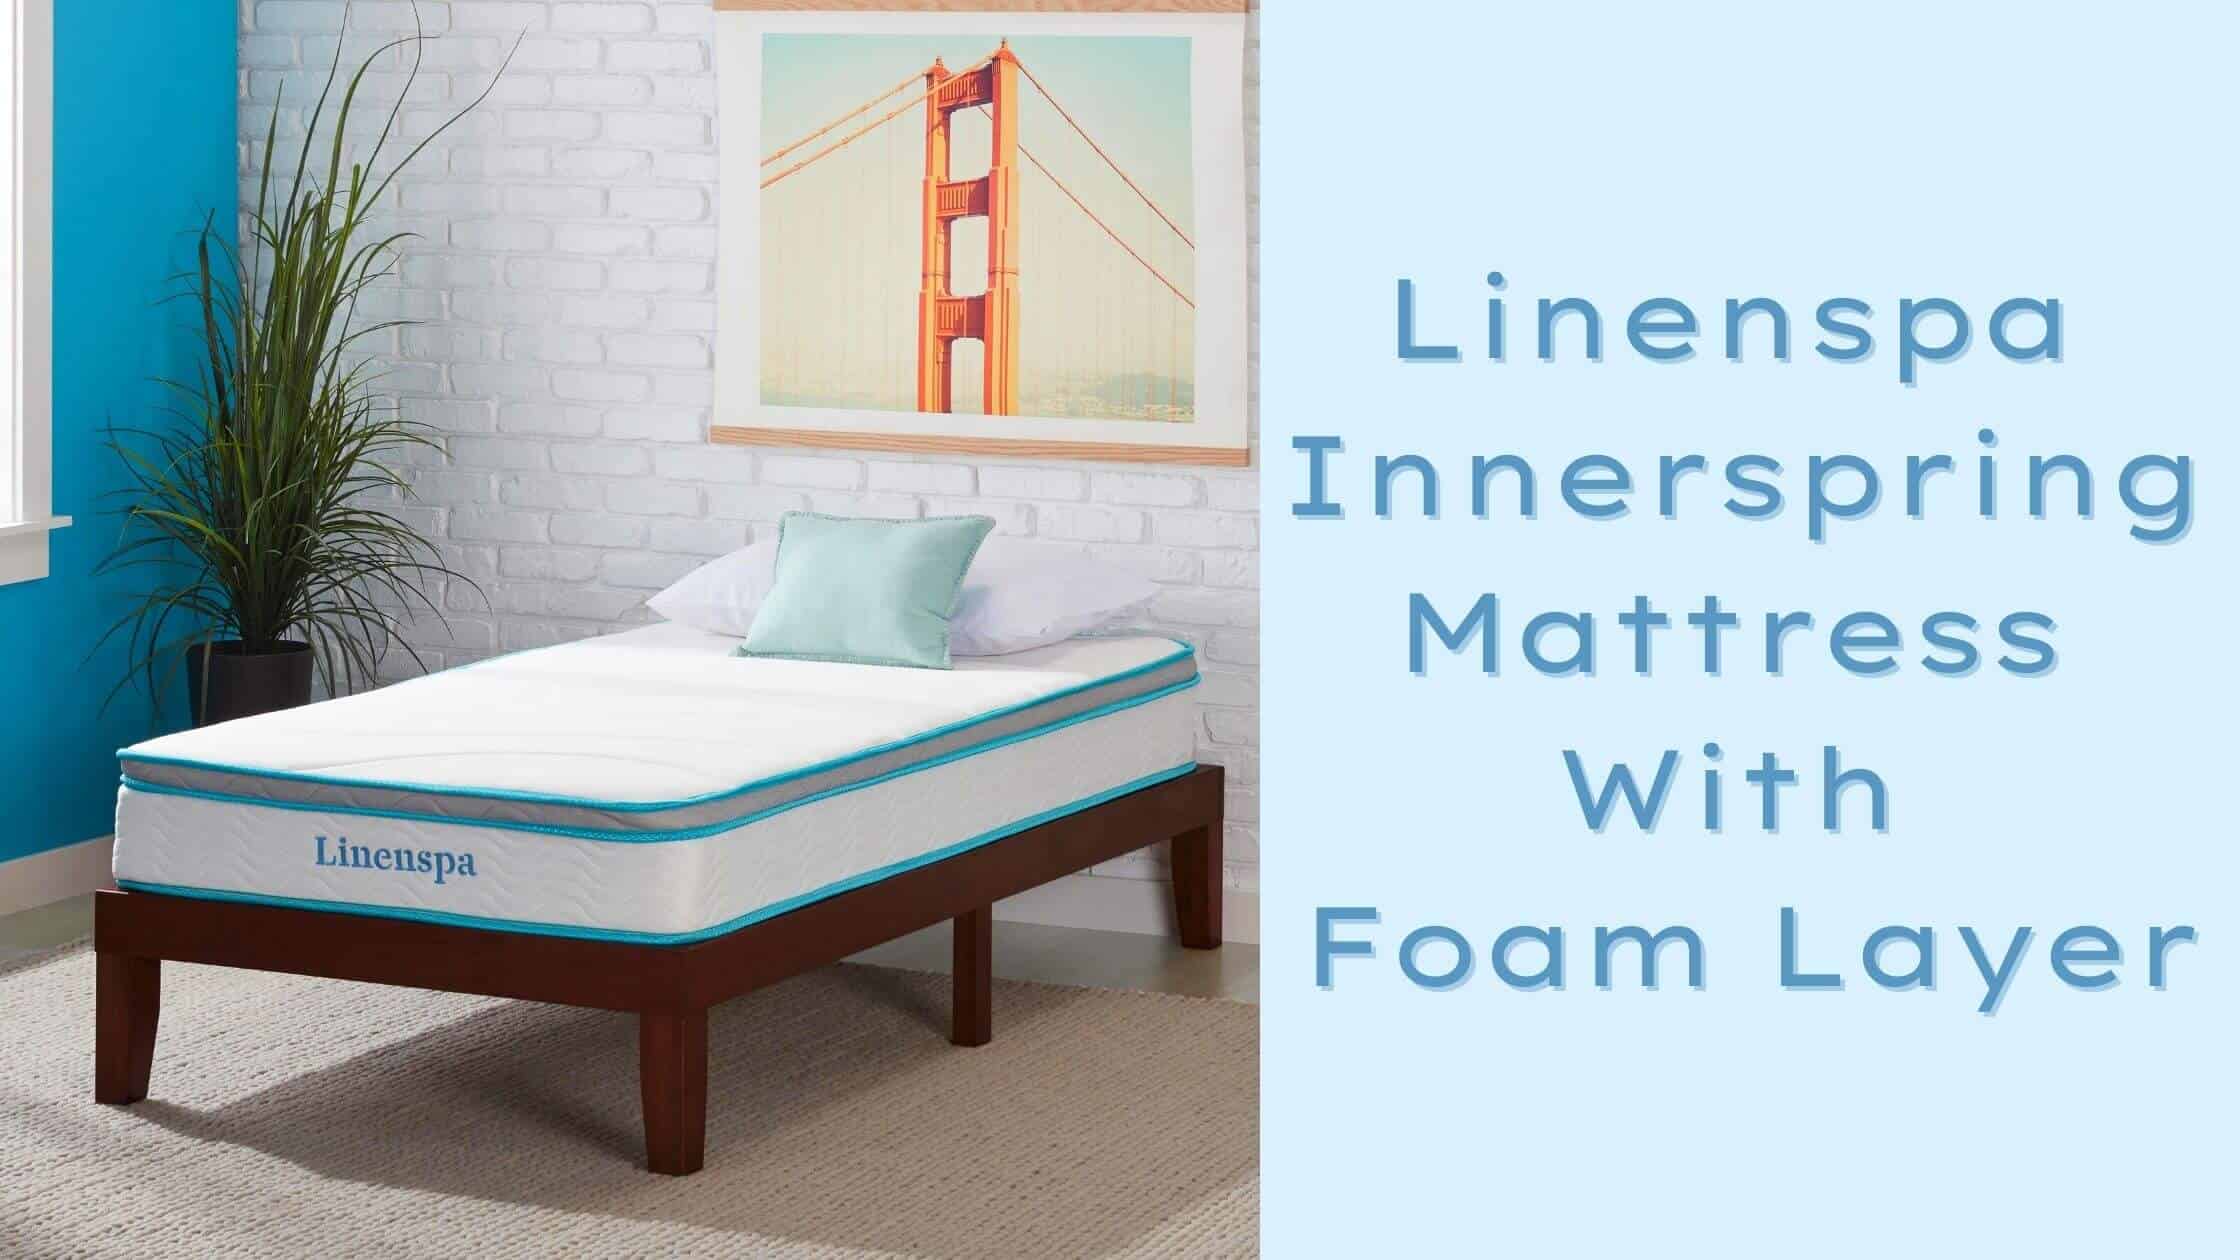 Linenspa Innerspring Mattress With Foam Layer